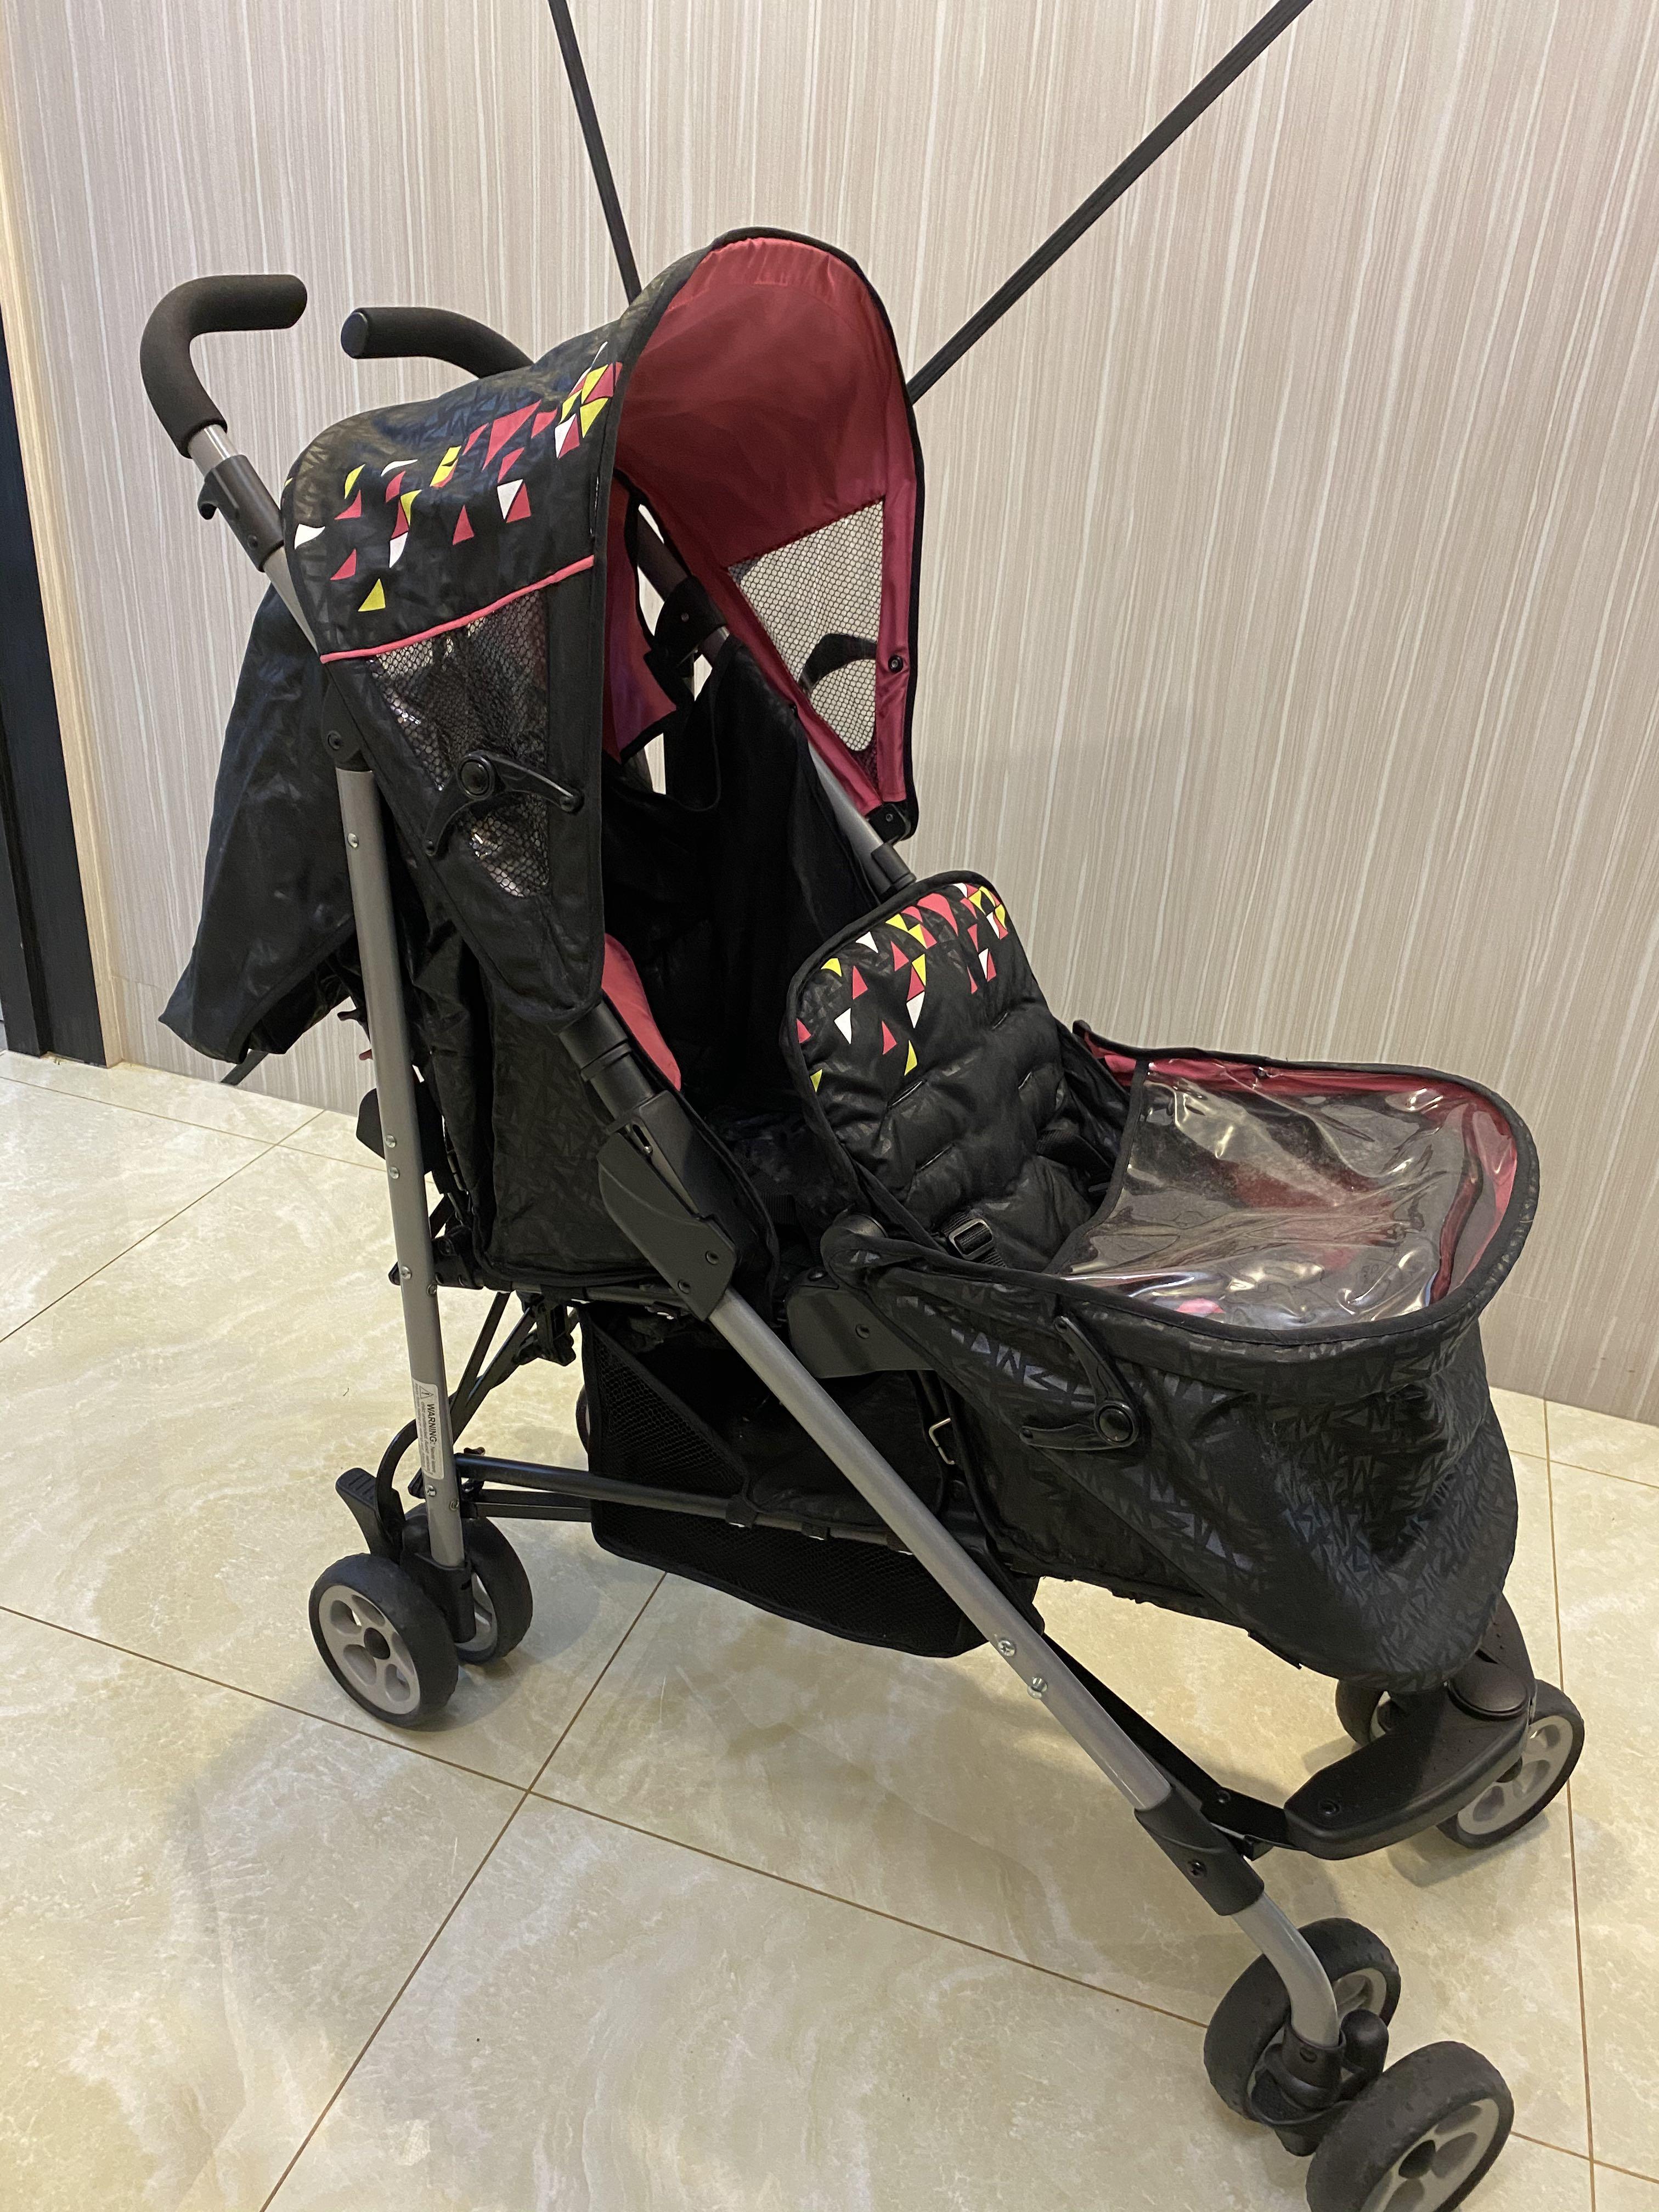 goodbaby twin stroller